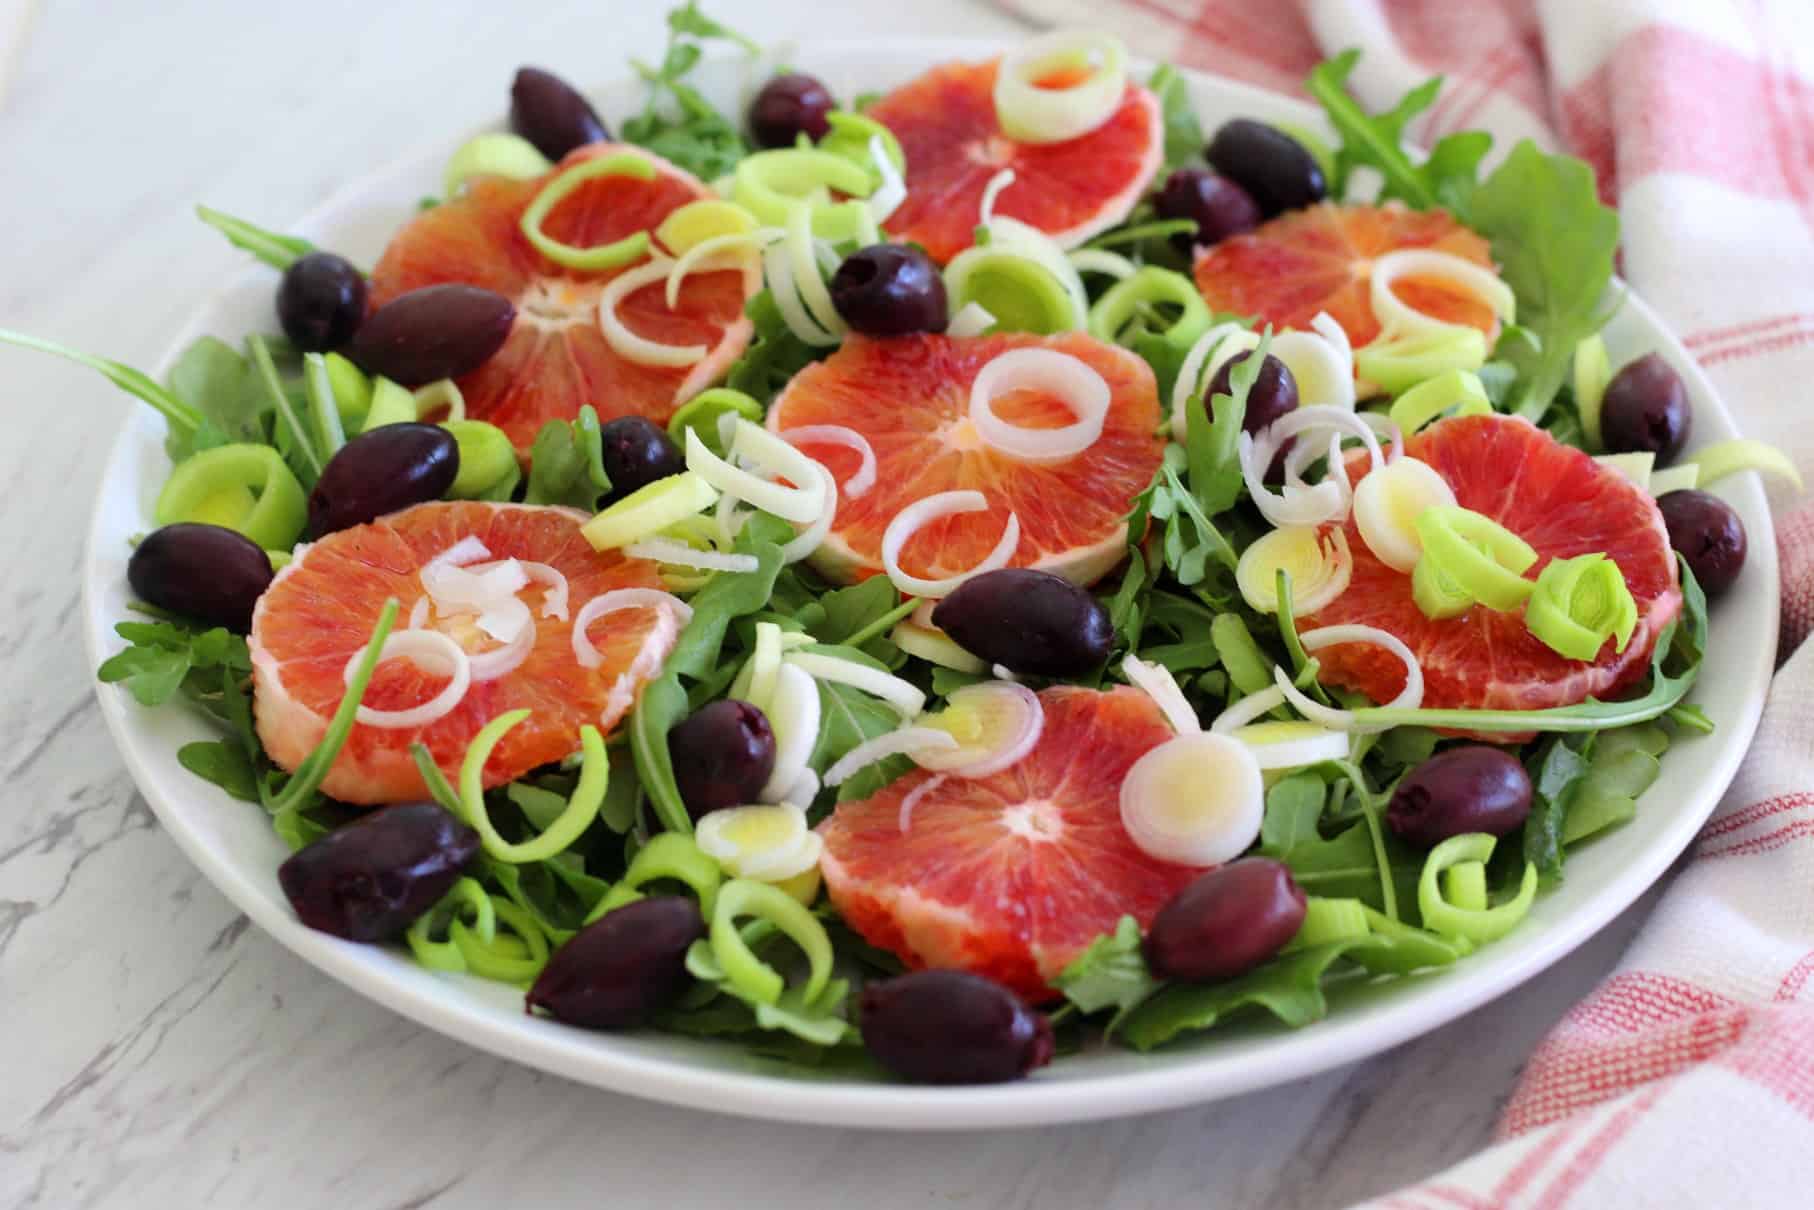 An orange salad, shown sideways. Ingredients visible on the salads are olives, leeks, greens and blood oranges sliced in circular shape.